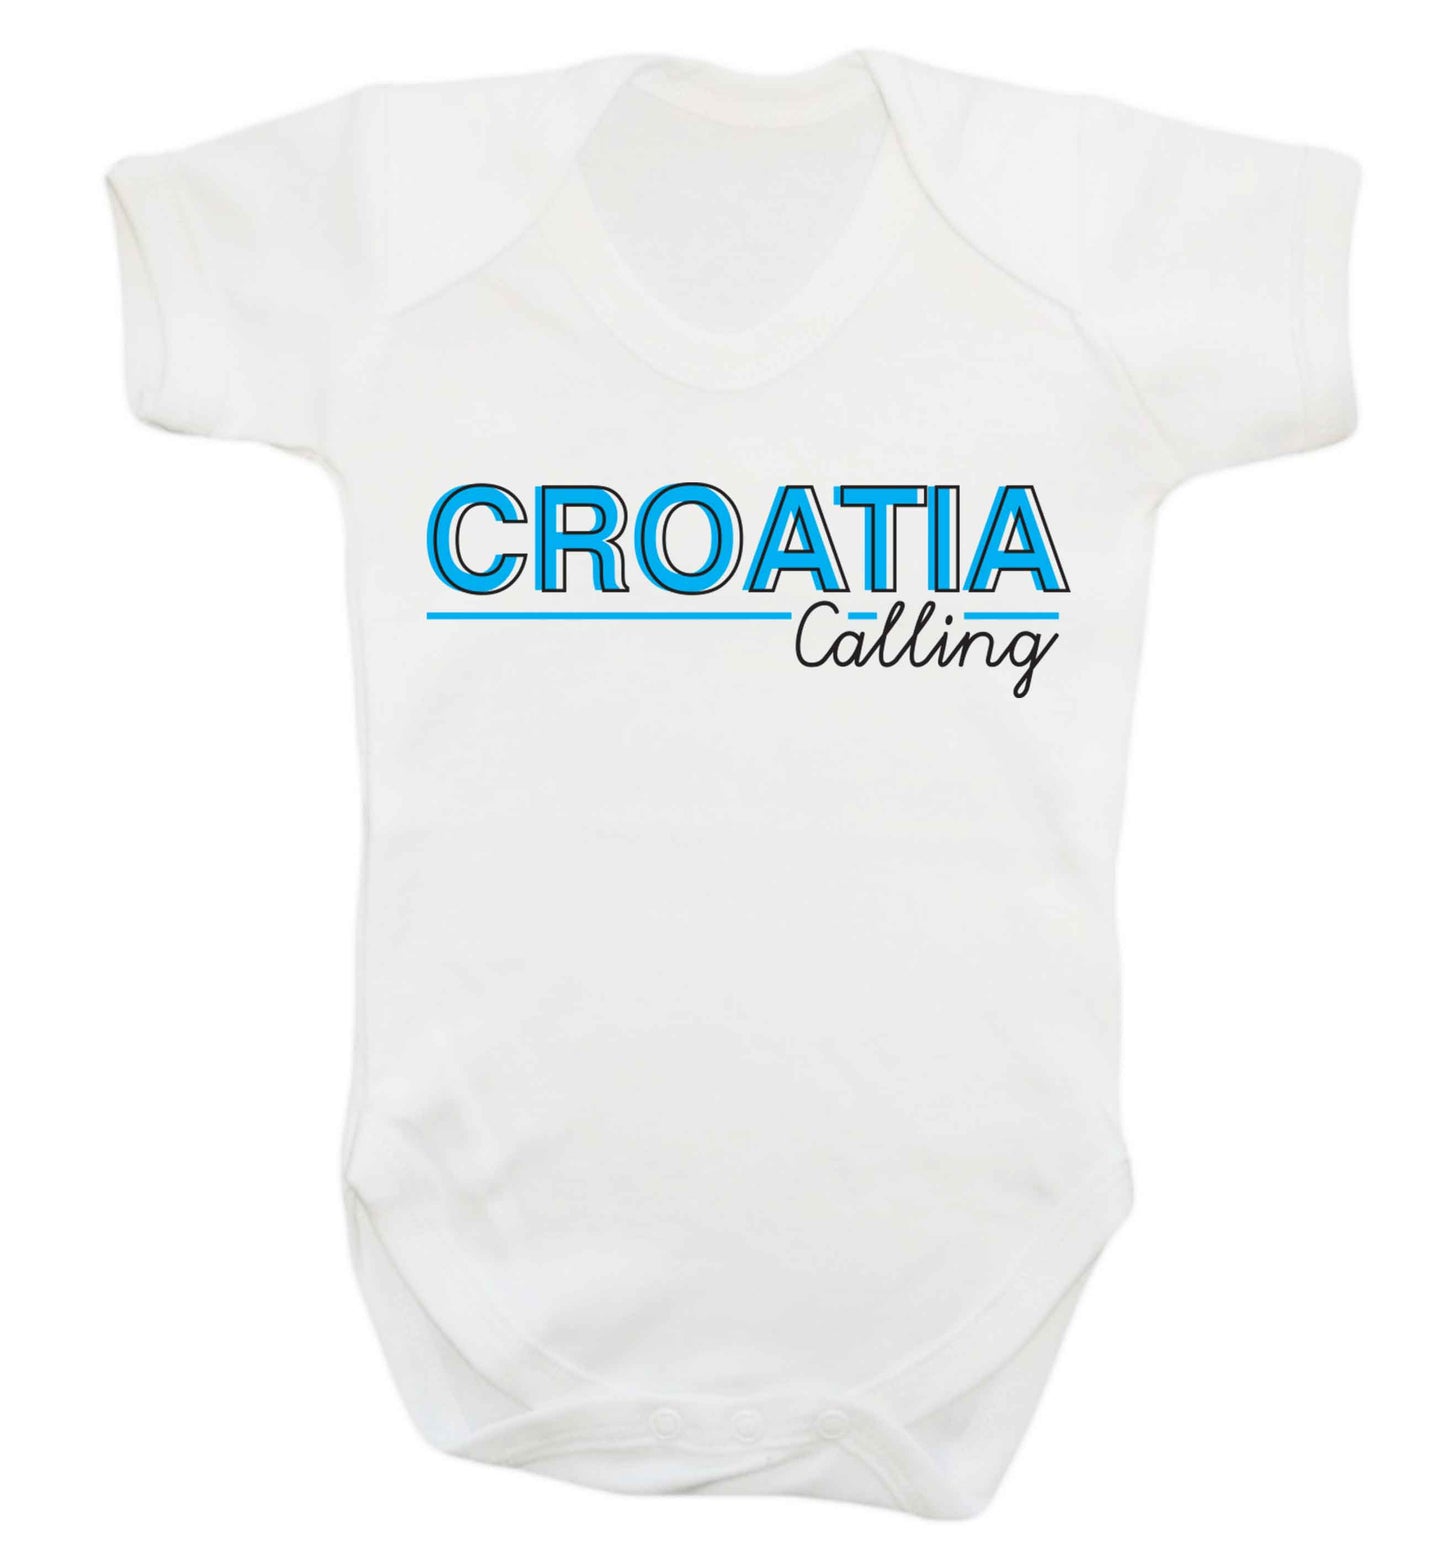 Croatia calling Baby Vest white 18-24 months